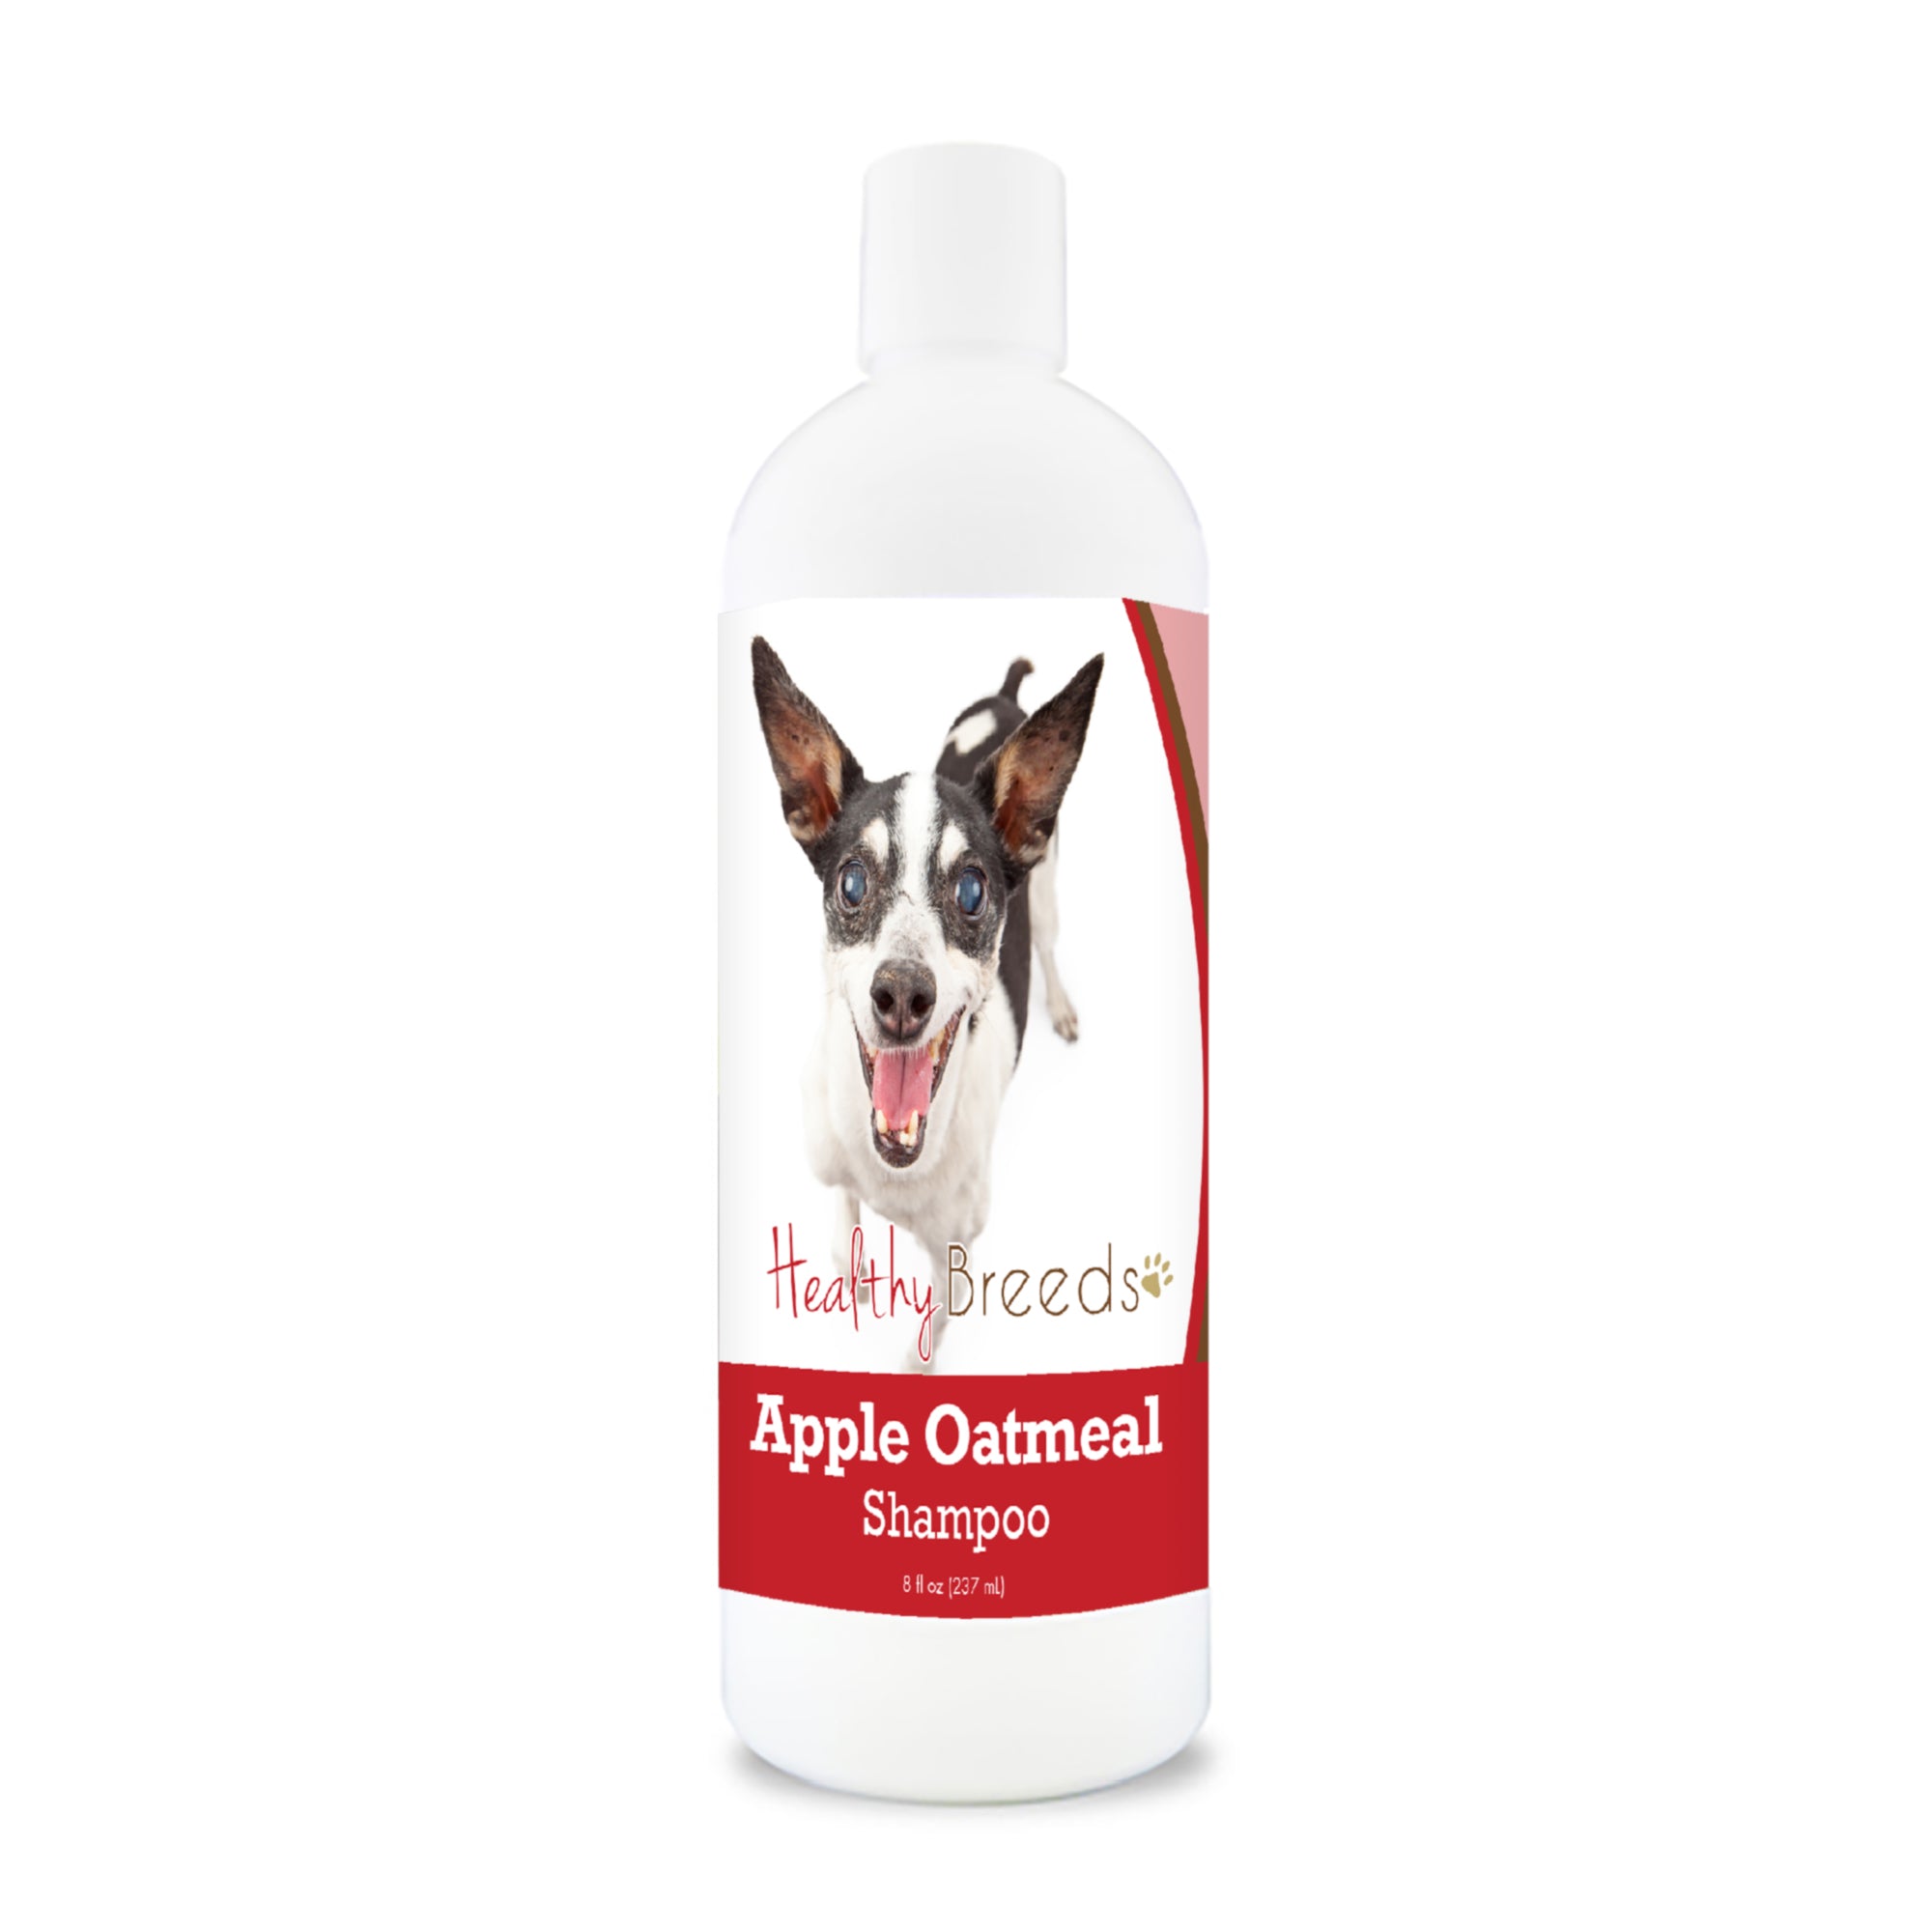 Rat Terrier Apple Oatmeal Shampoo 8 oz